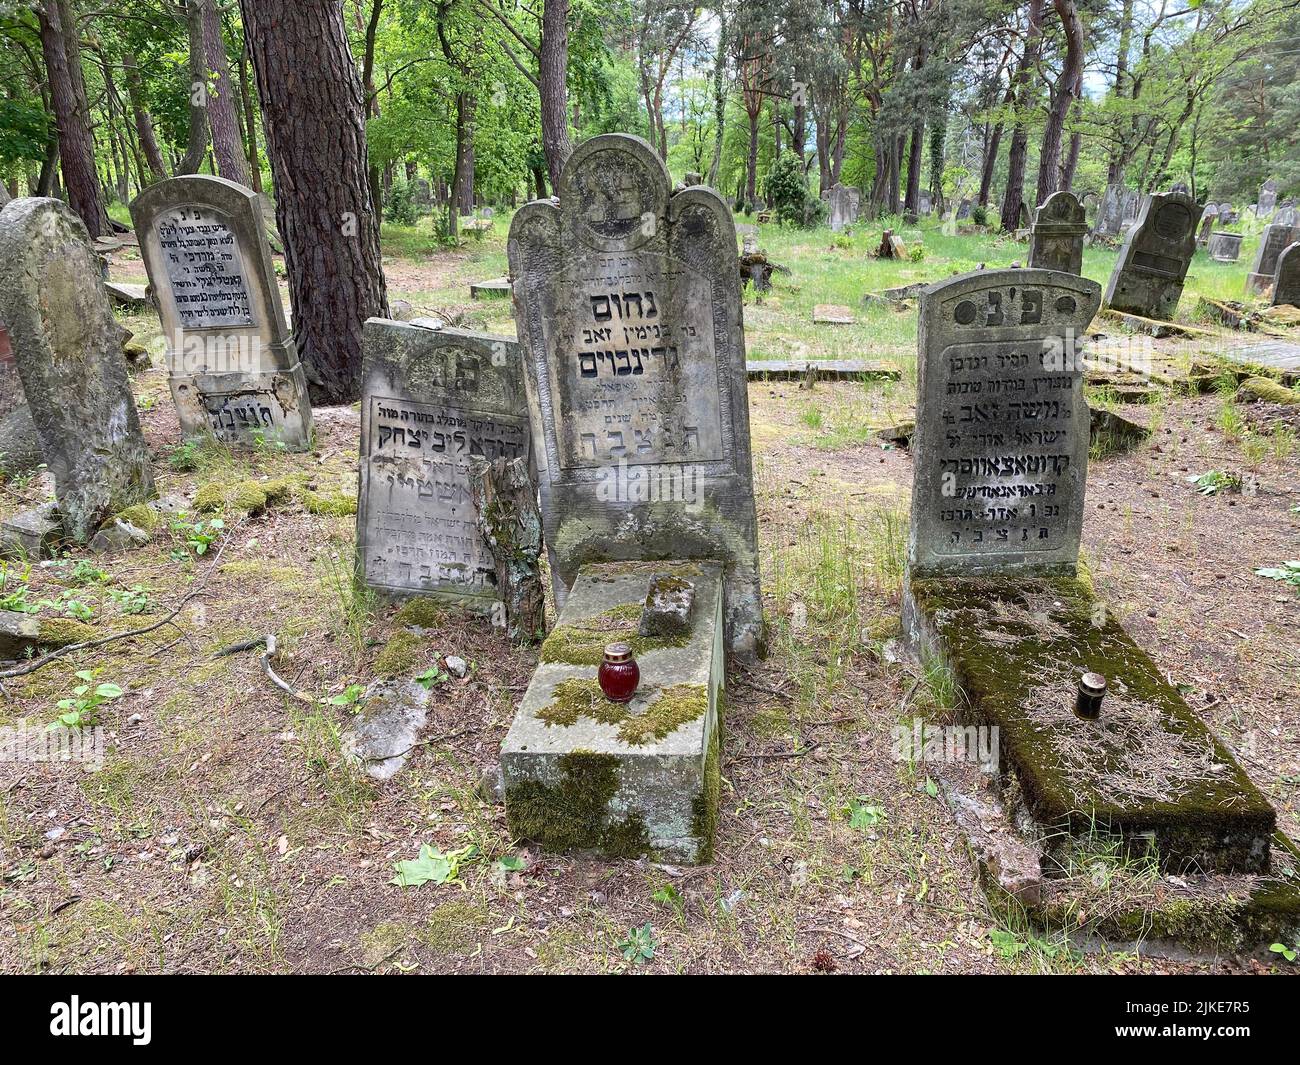 Rovine del vecchio cimitero ebraico a Otwock Polonia cmentarz żydowski w testacadini Otwock cimitero ebraico tomba ebraica beit kvarot lapide ebraica Foto Stock